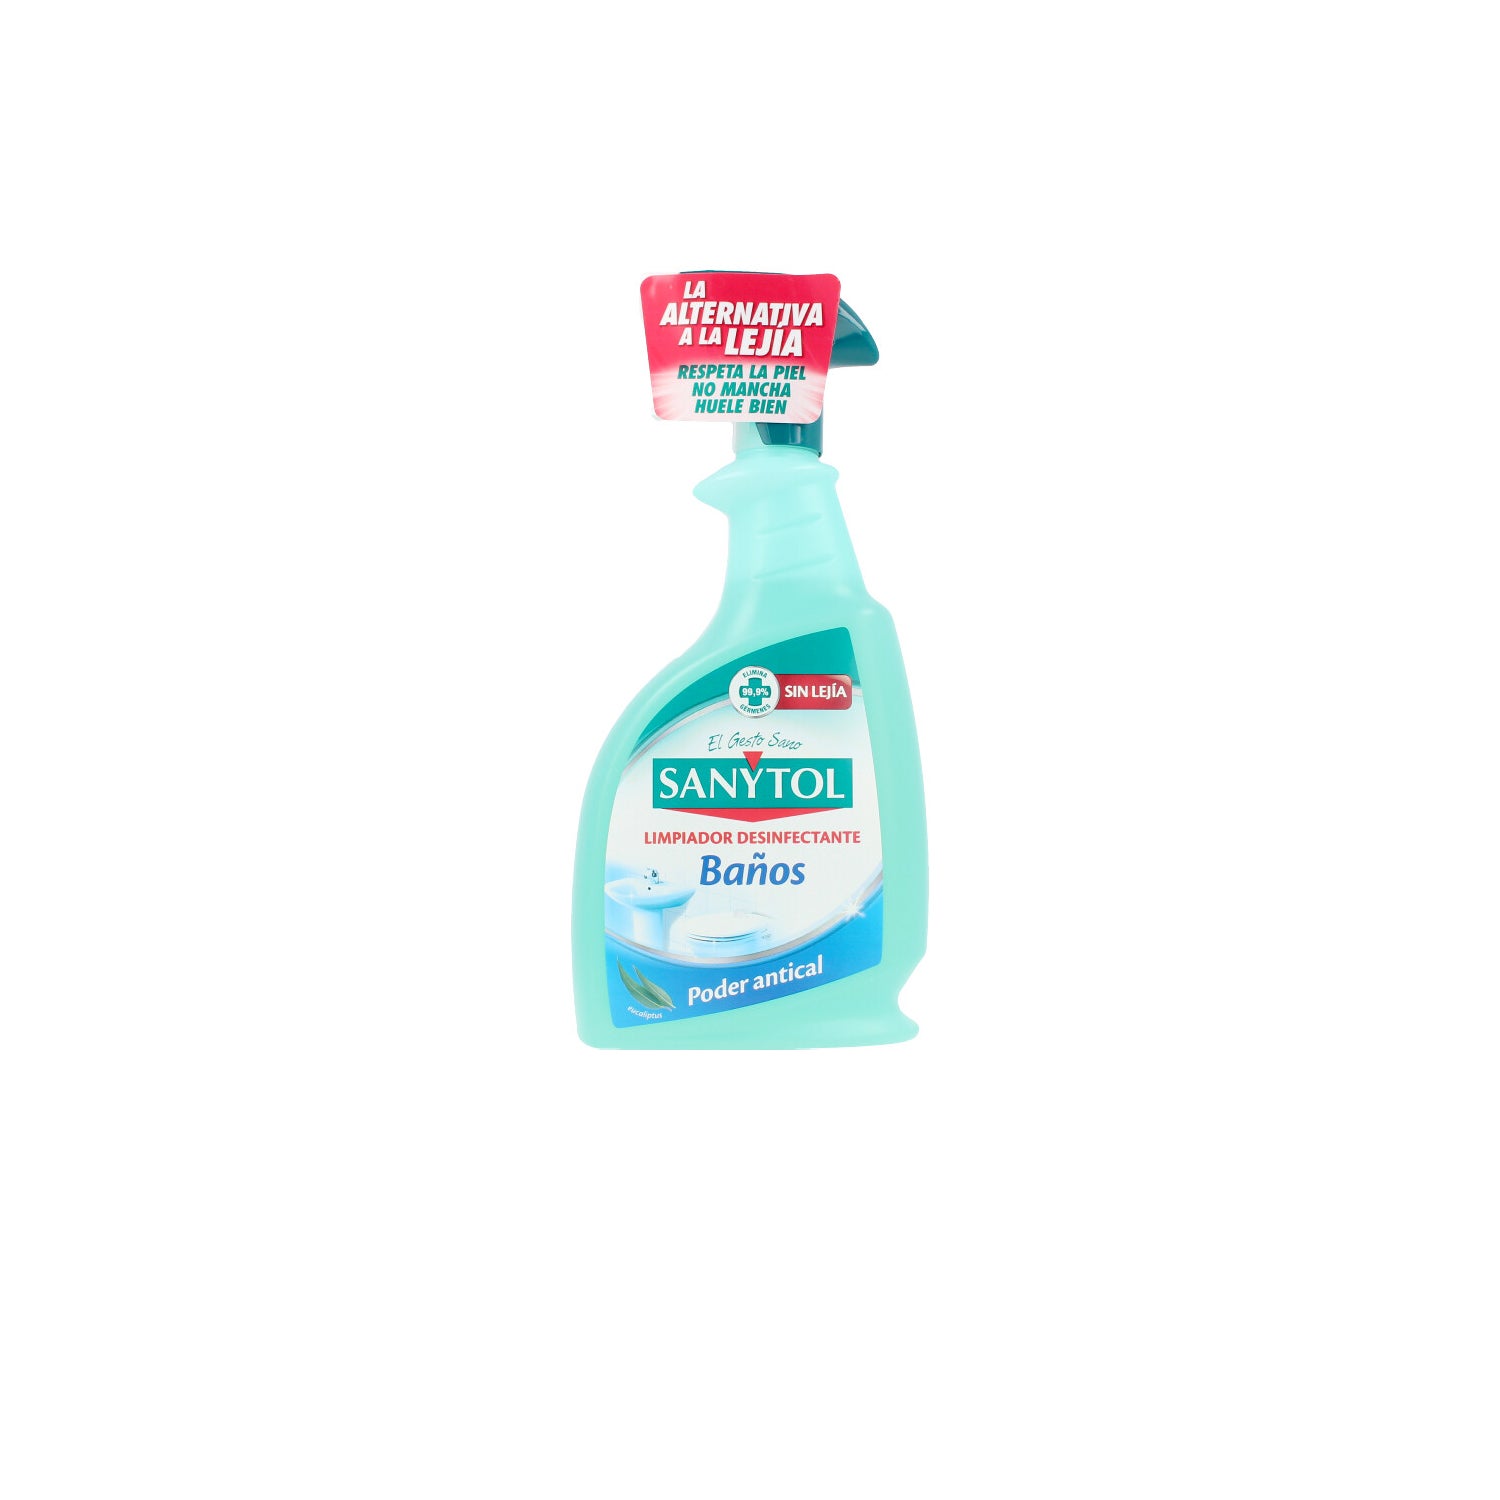 Sanytol – 4 unidades x 750ml, Limpiador Desinfectante Antical Baños por  8,36€